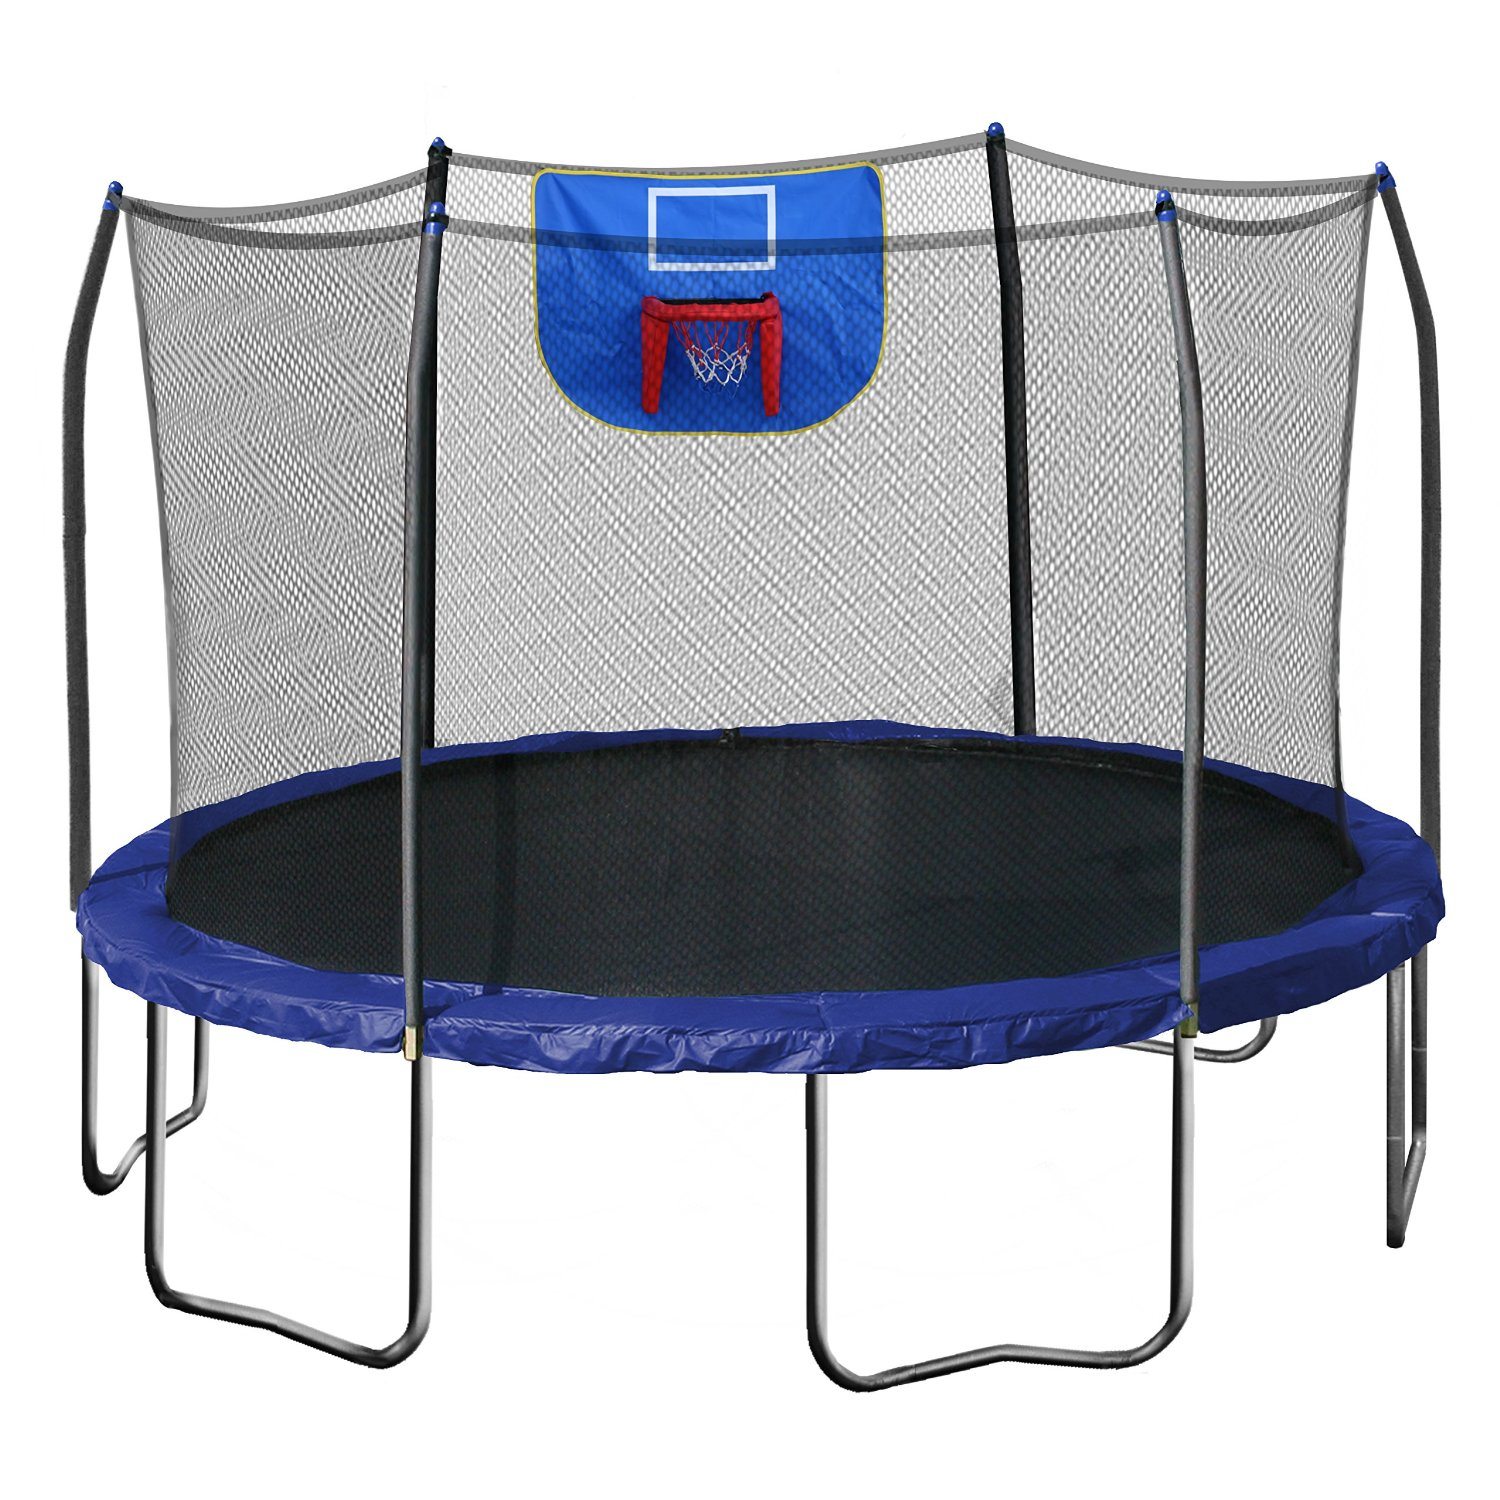 Skywalker Trampolines 12-Feet Jump N' Dunk Trampoline with Safety Enclosure and Basketball Hoop